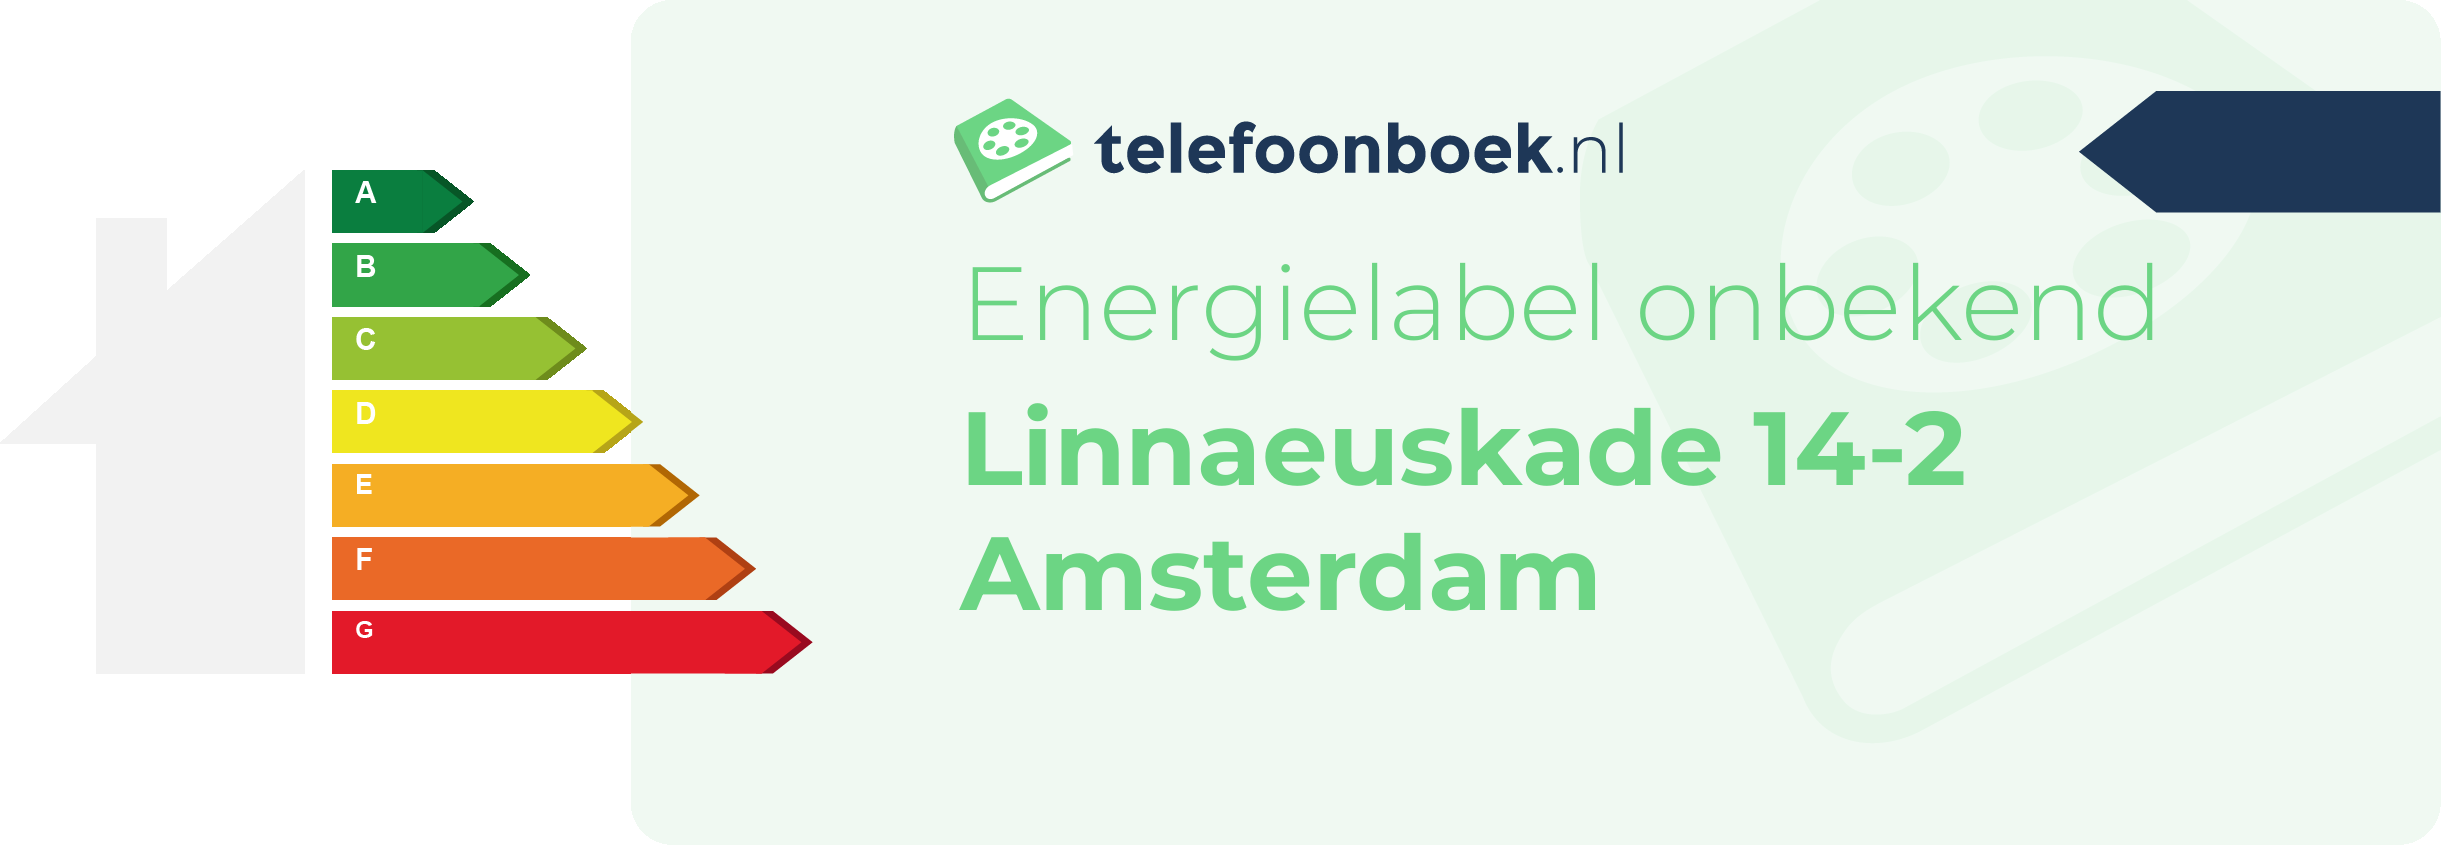 Energielabel Linnaeuskade 14-2 Amsterdam